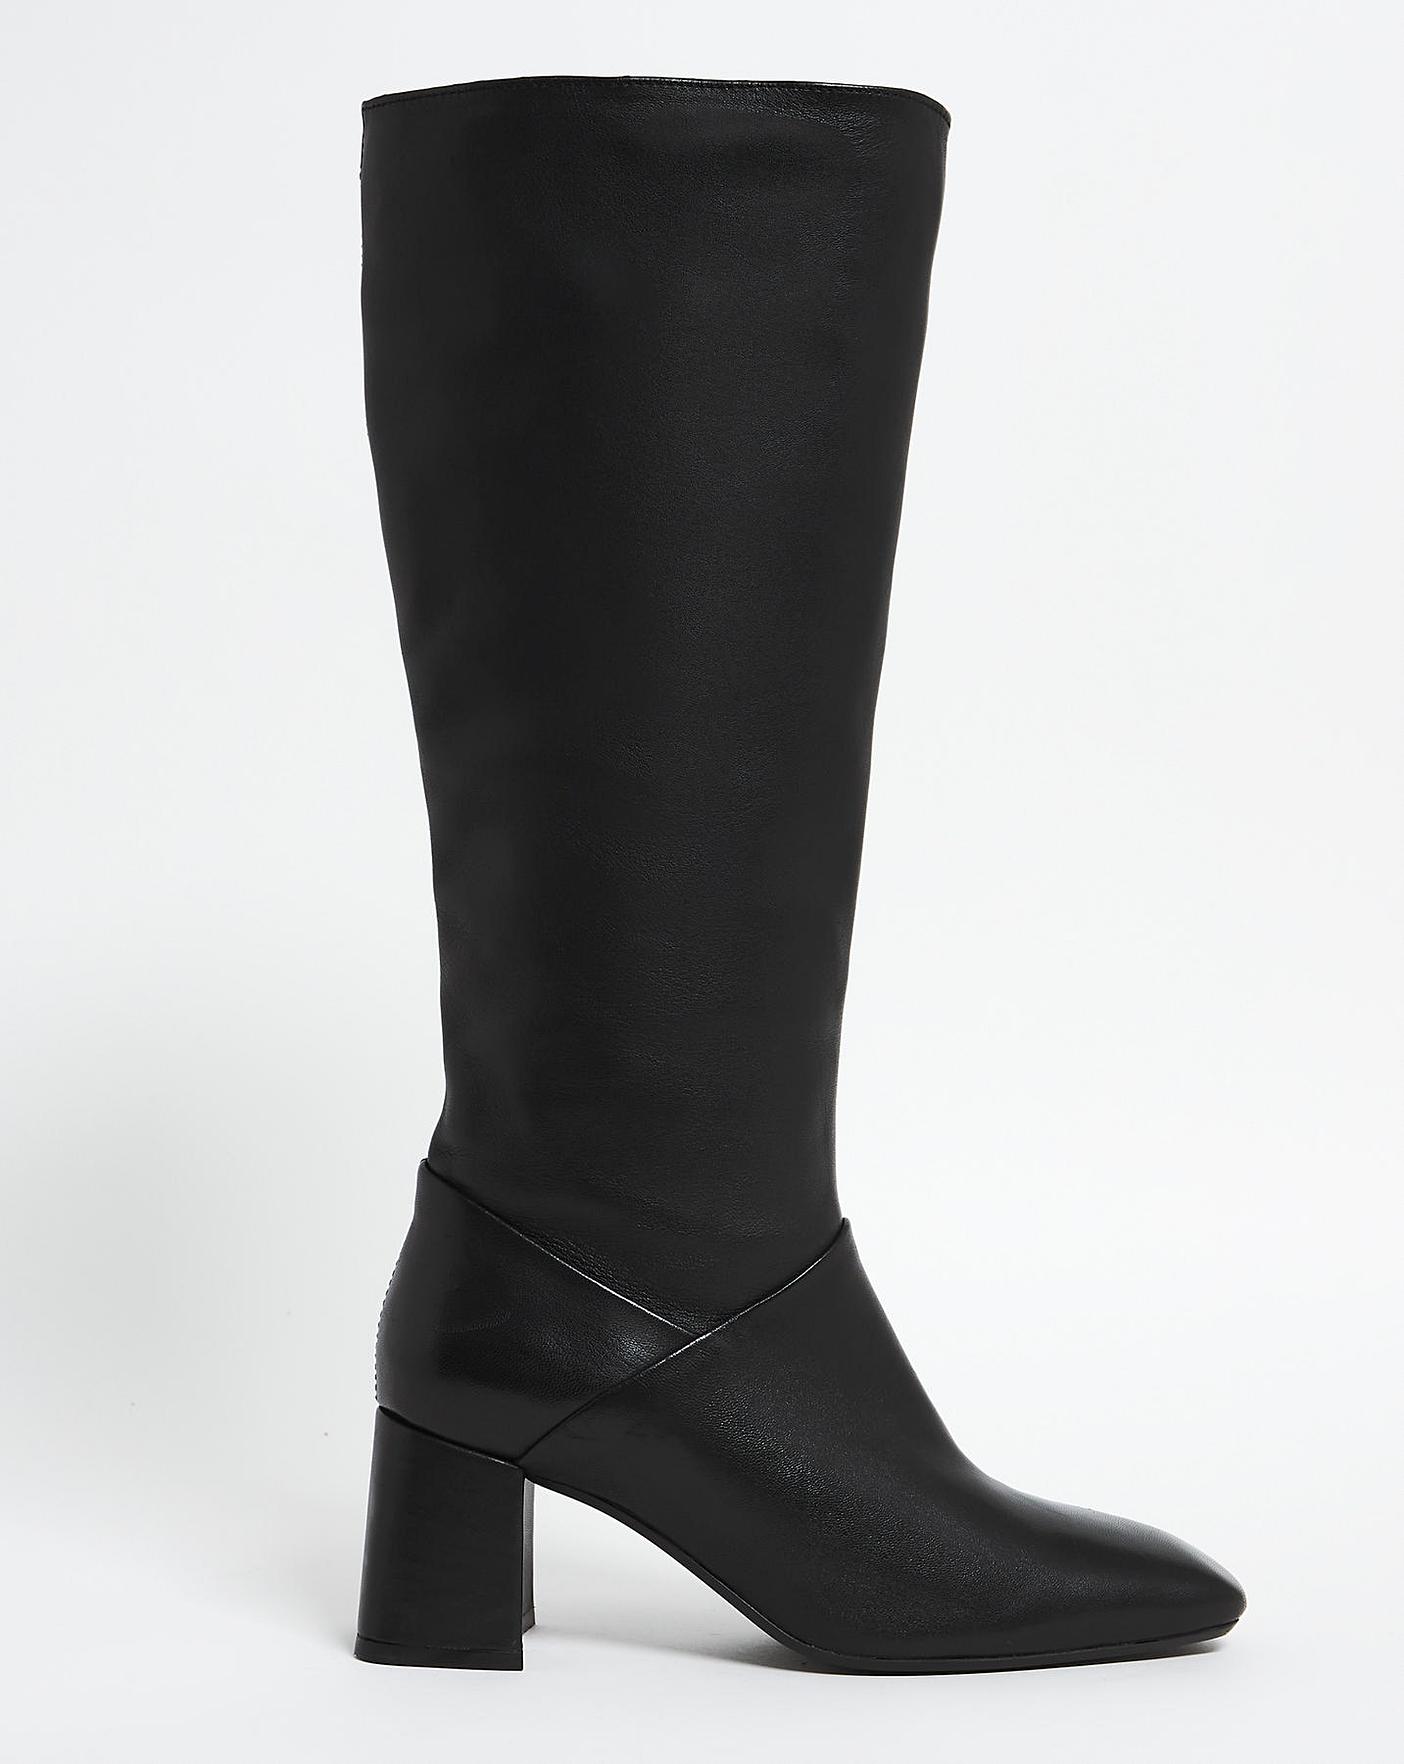 Leather Boots Wide Super Curvy Calf | Marisota